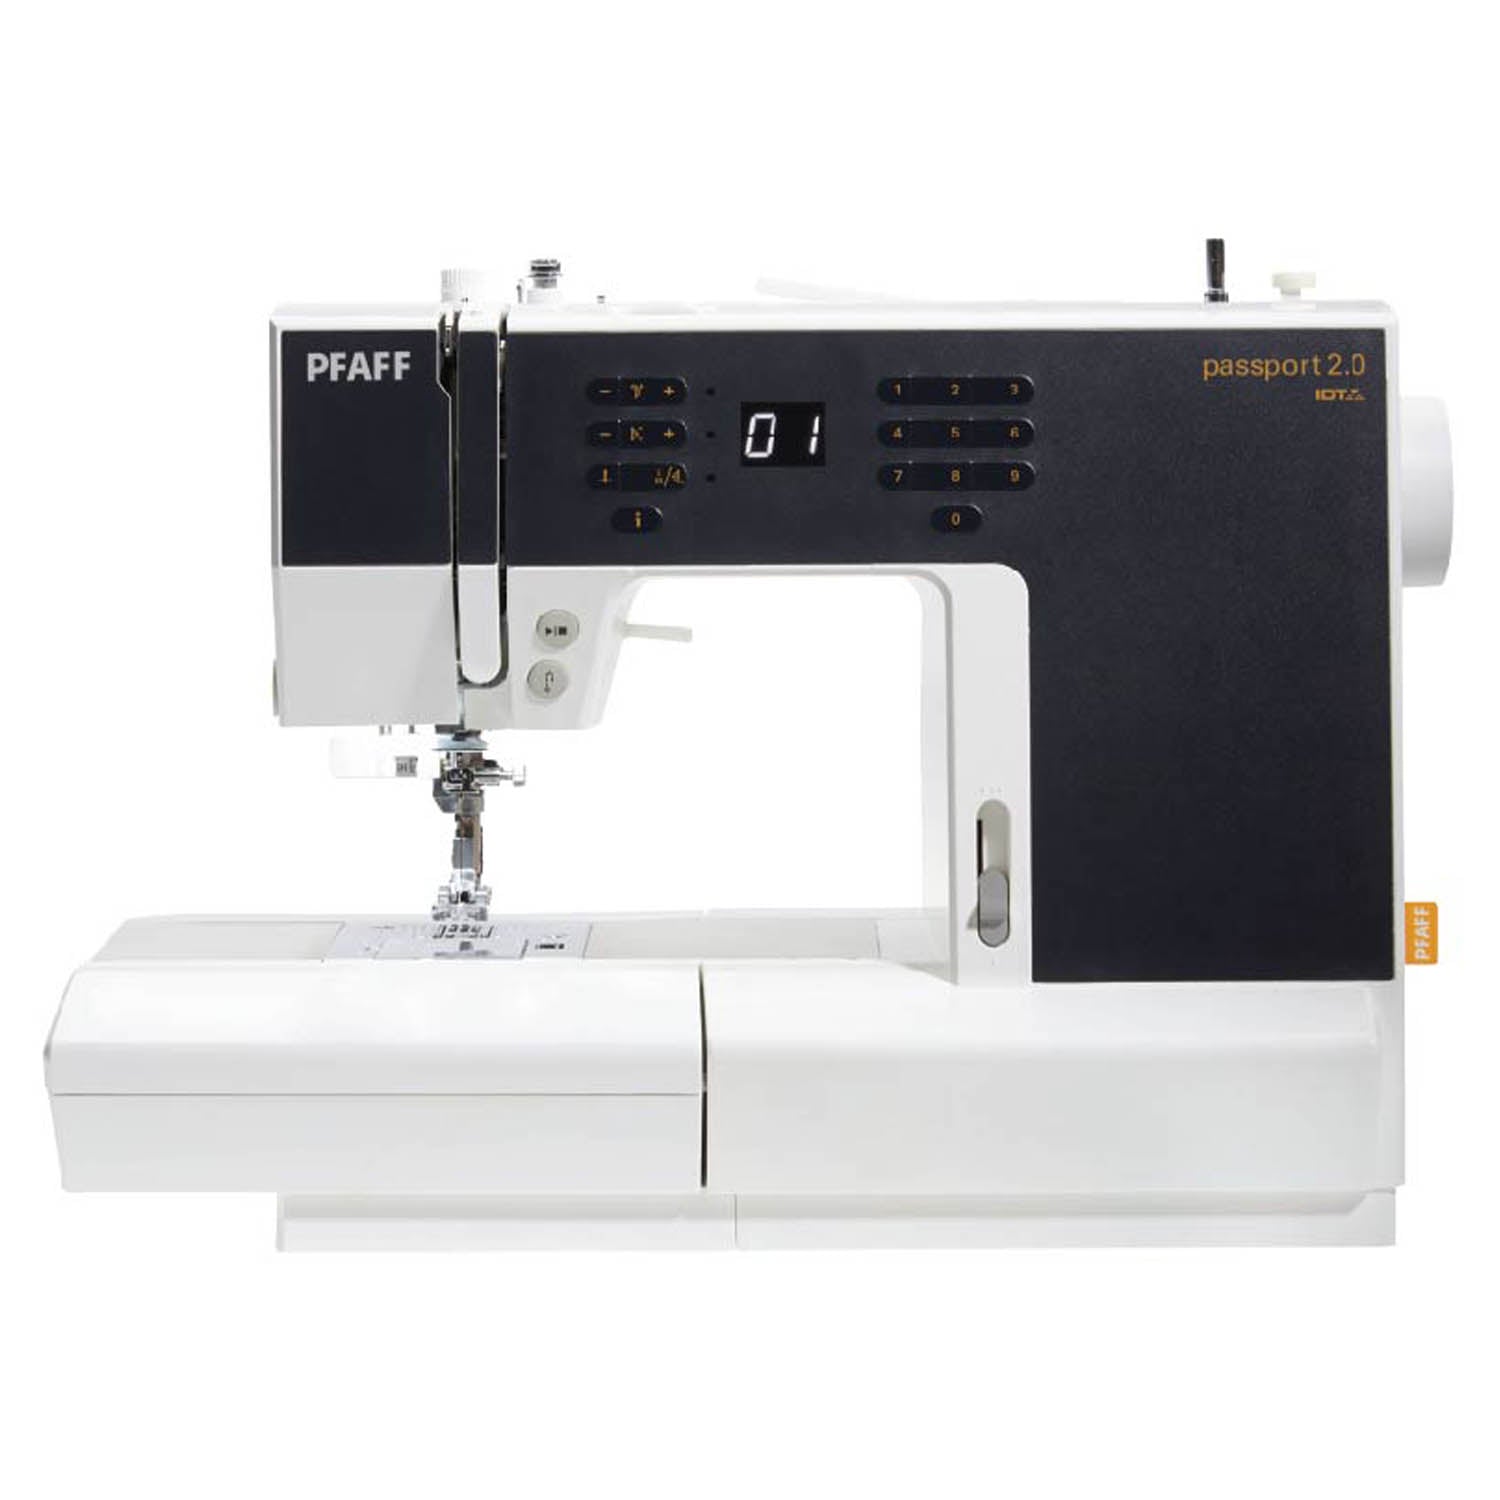 PFAFF Passport 2.0 Sewing Machine